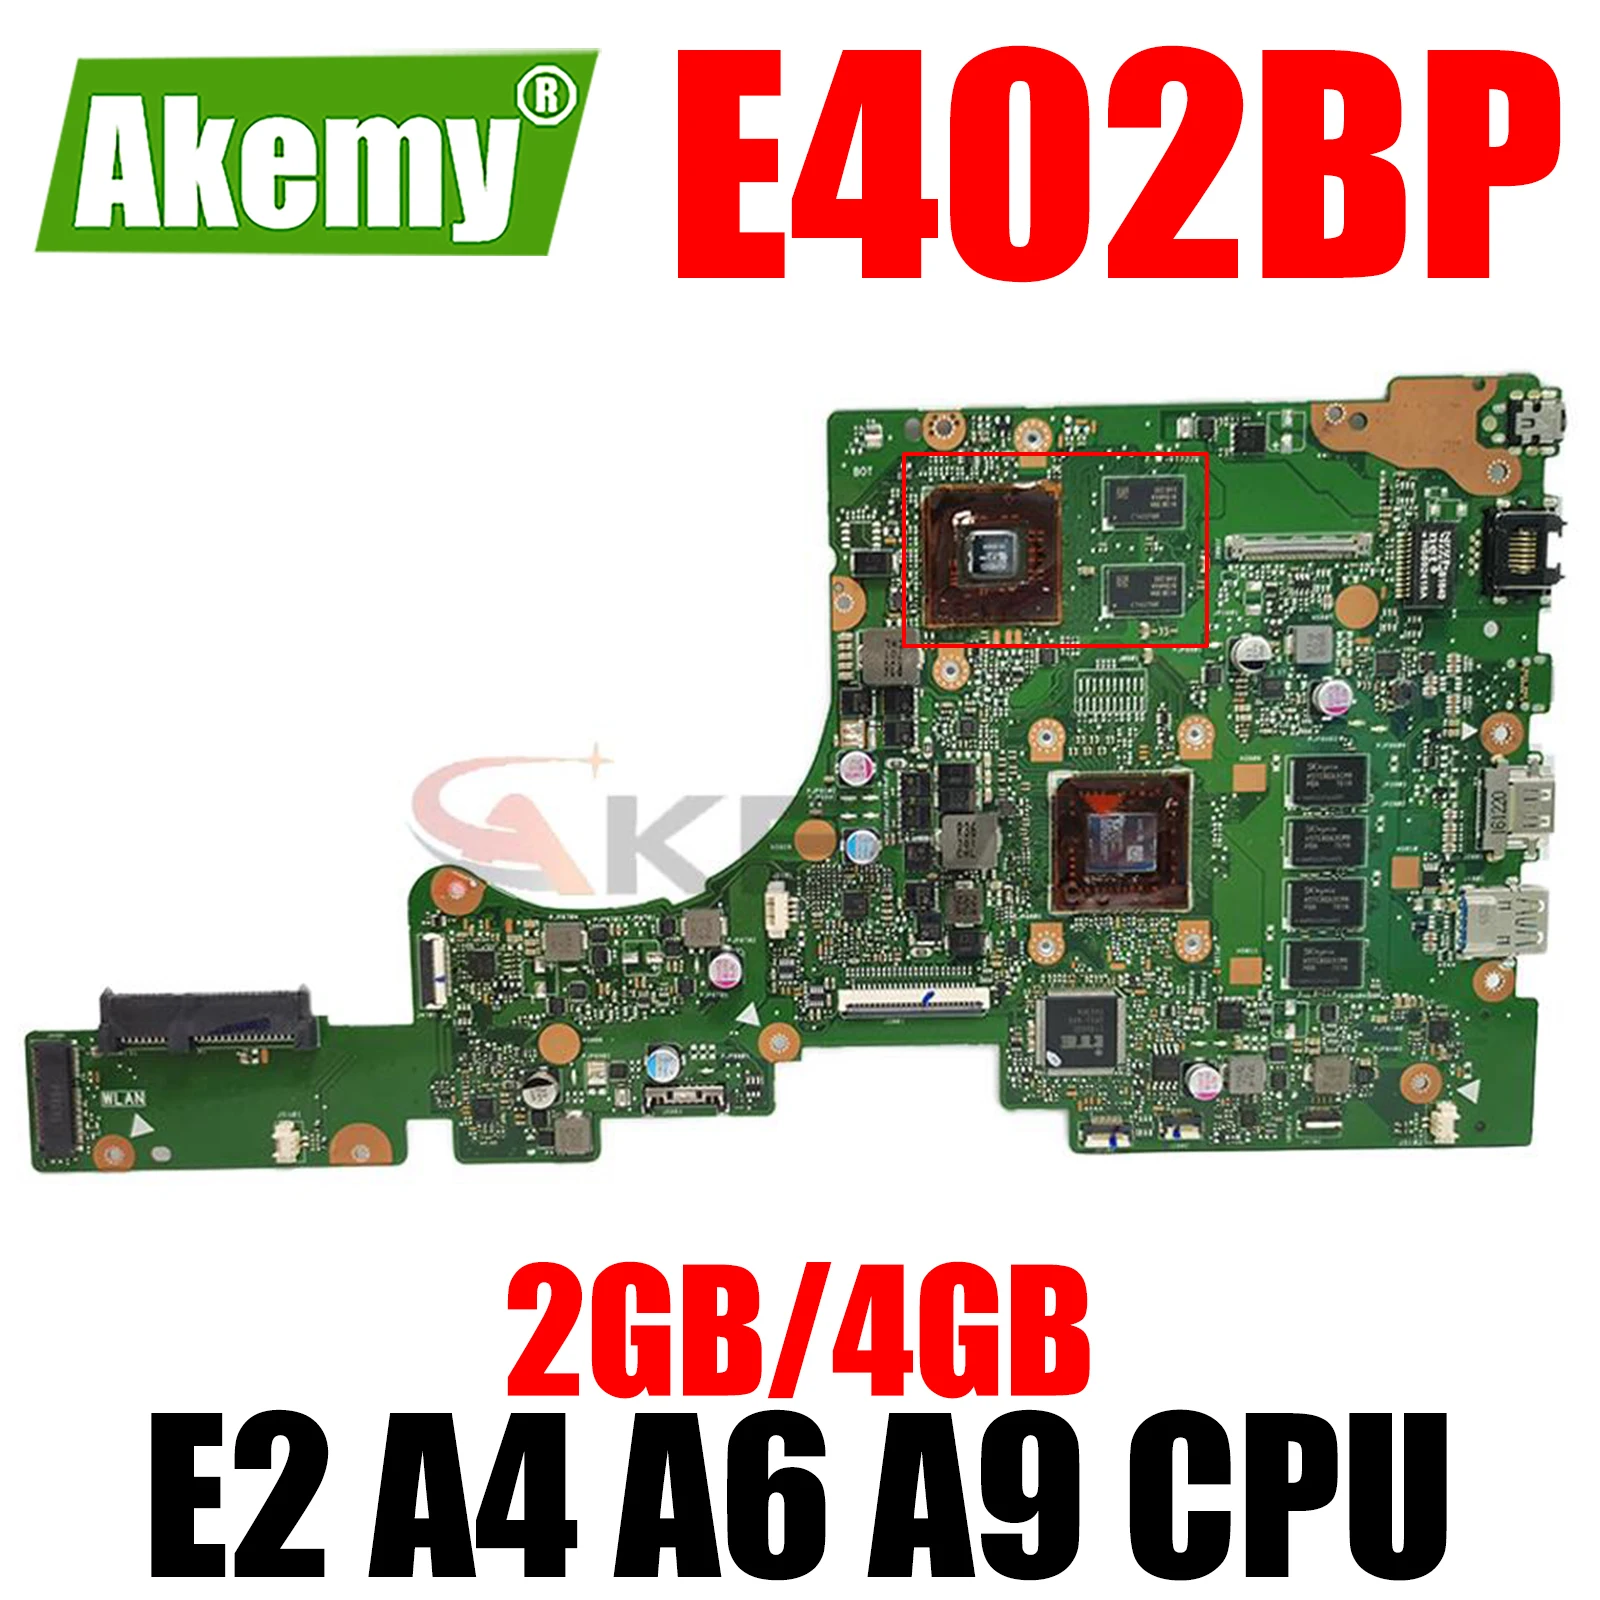 

Original E402BP Laptop Motherboard with VGPU AMD E2 A4 A6 A9 CPU 4G RAM for ASUS E402BP E402B Notebook Motherboard MainBoard